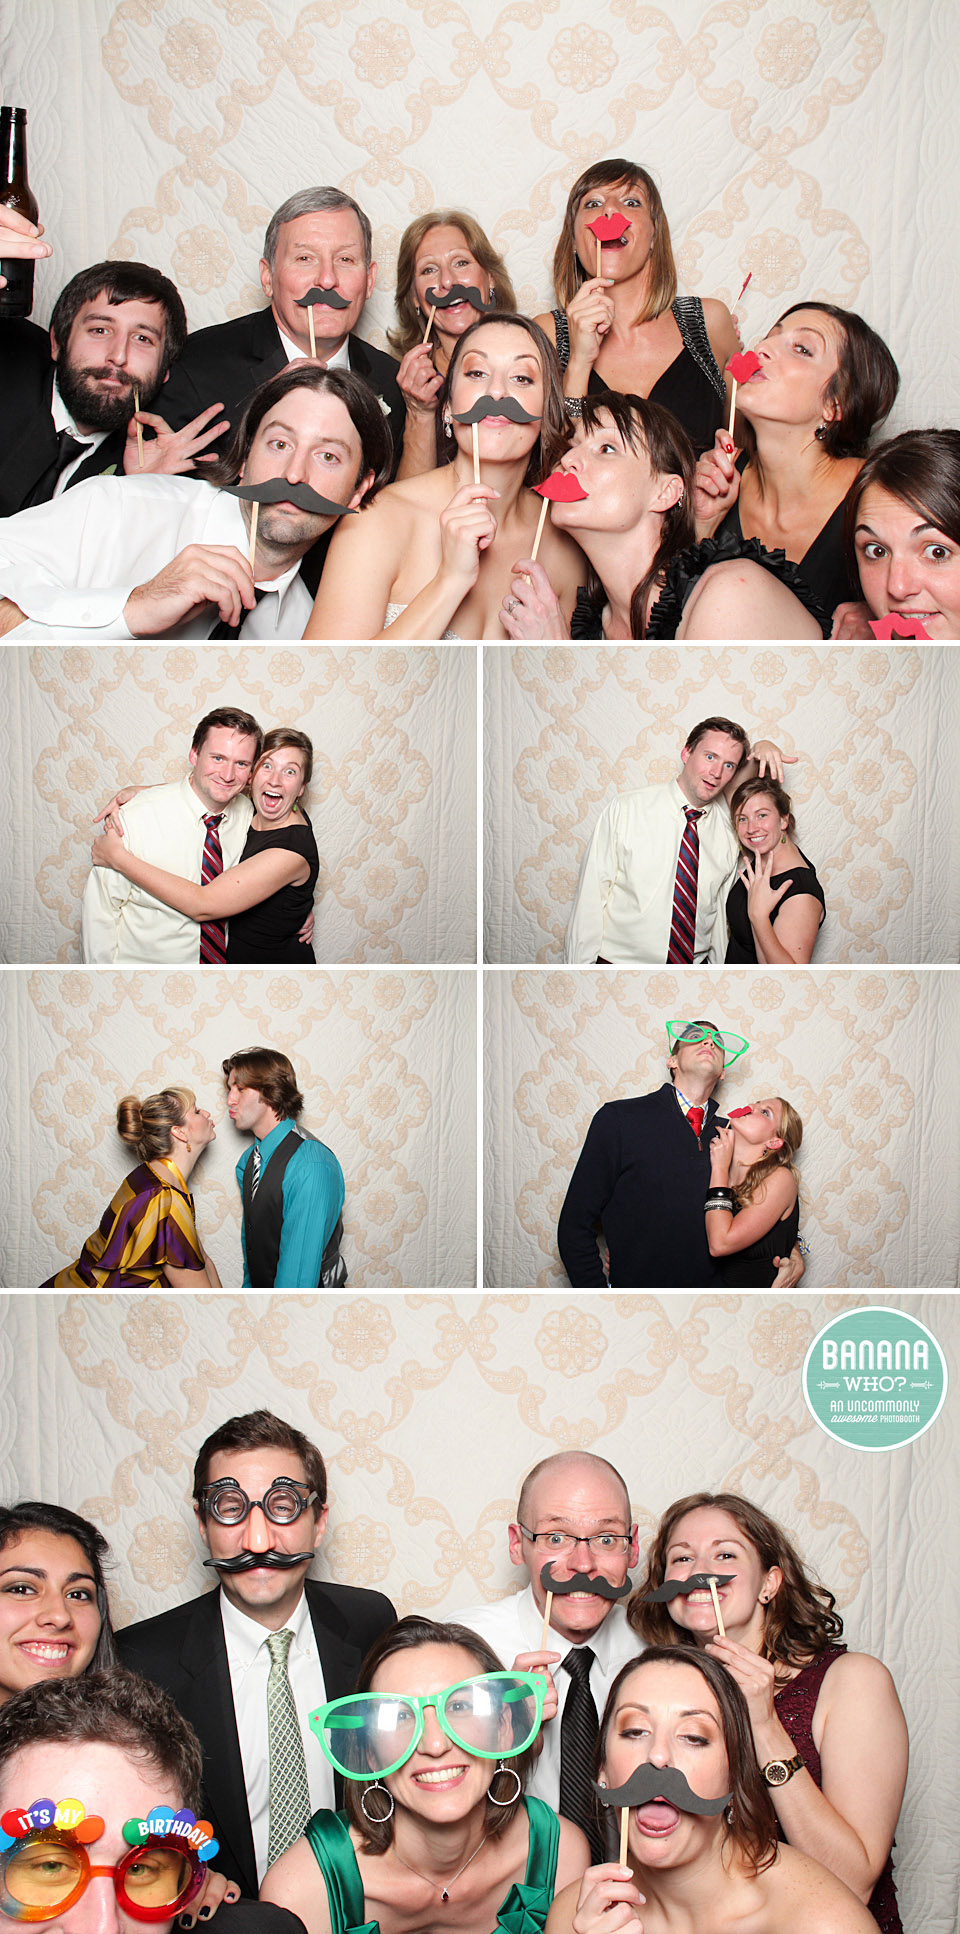 Family, fun weddings, Banana Who? Booth, KC photobooths, custom backdrops